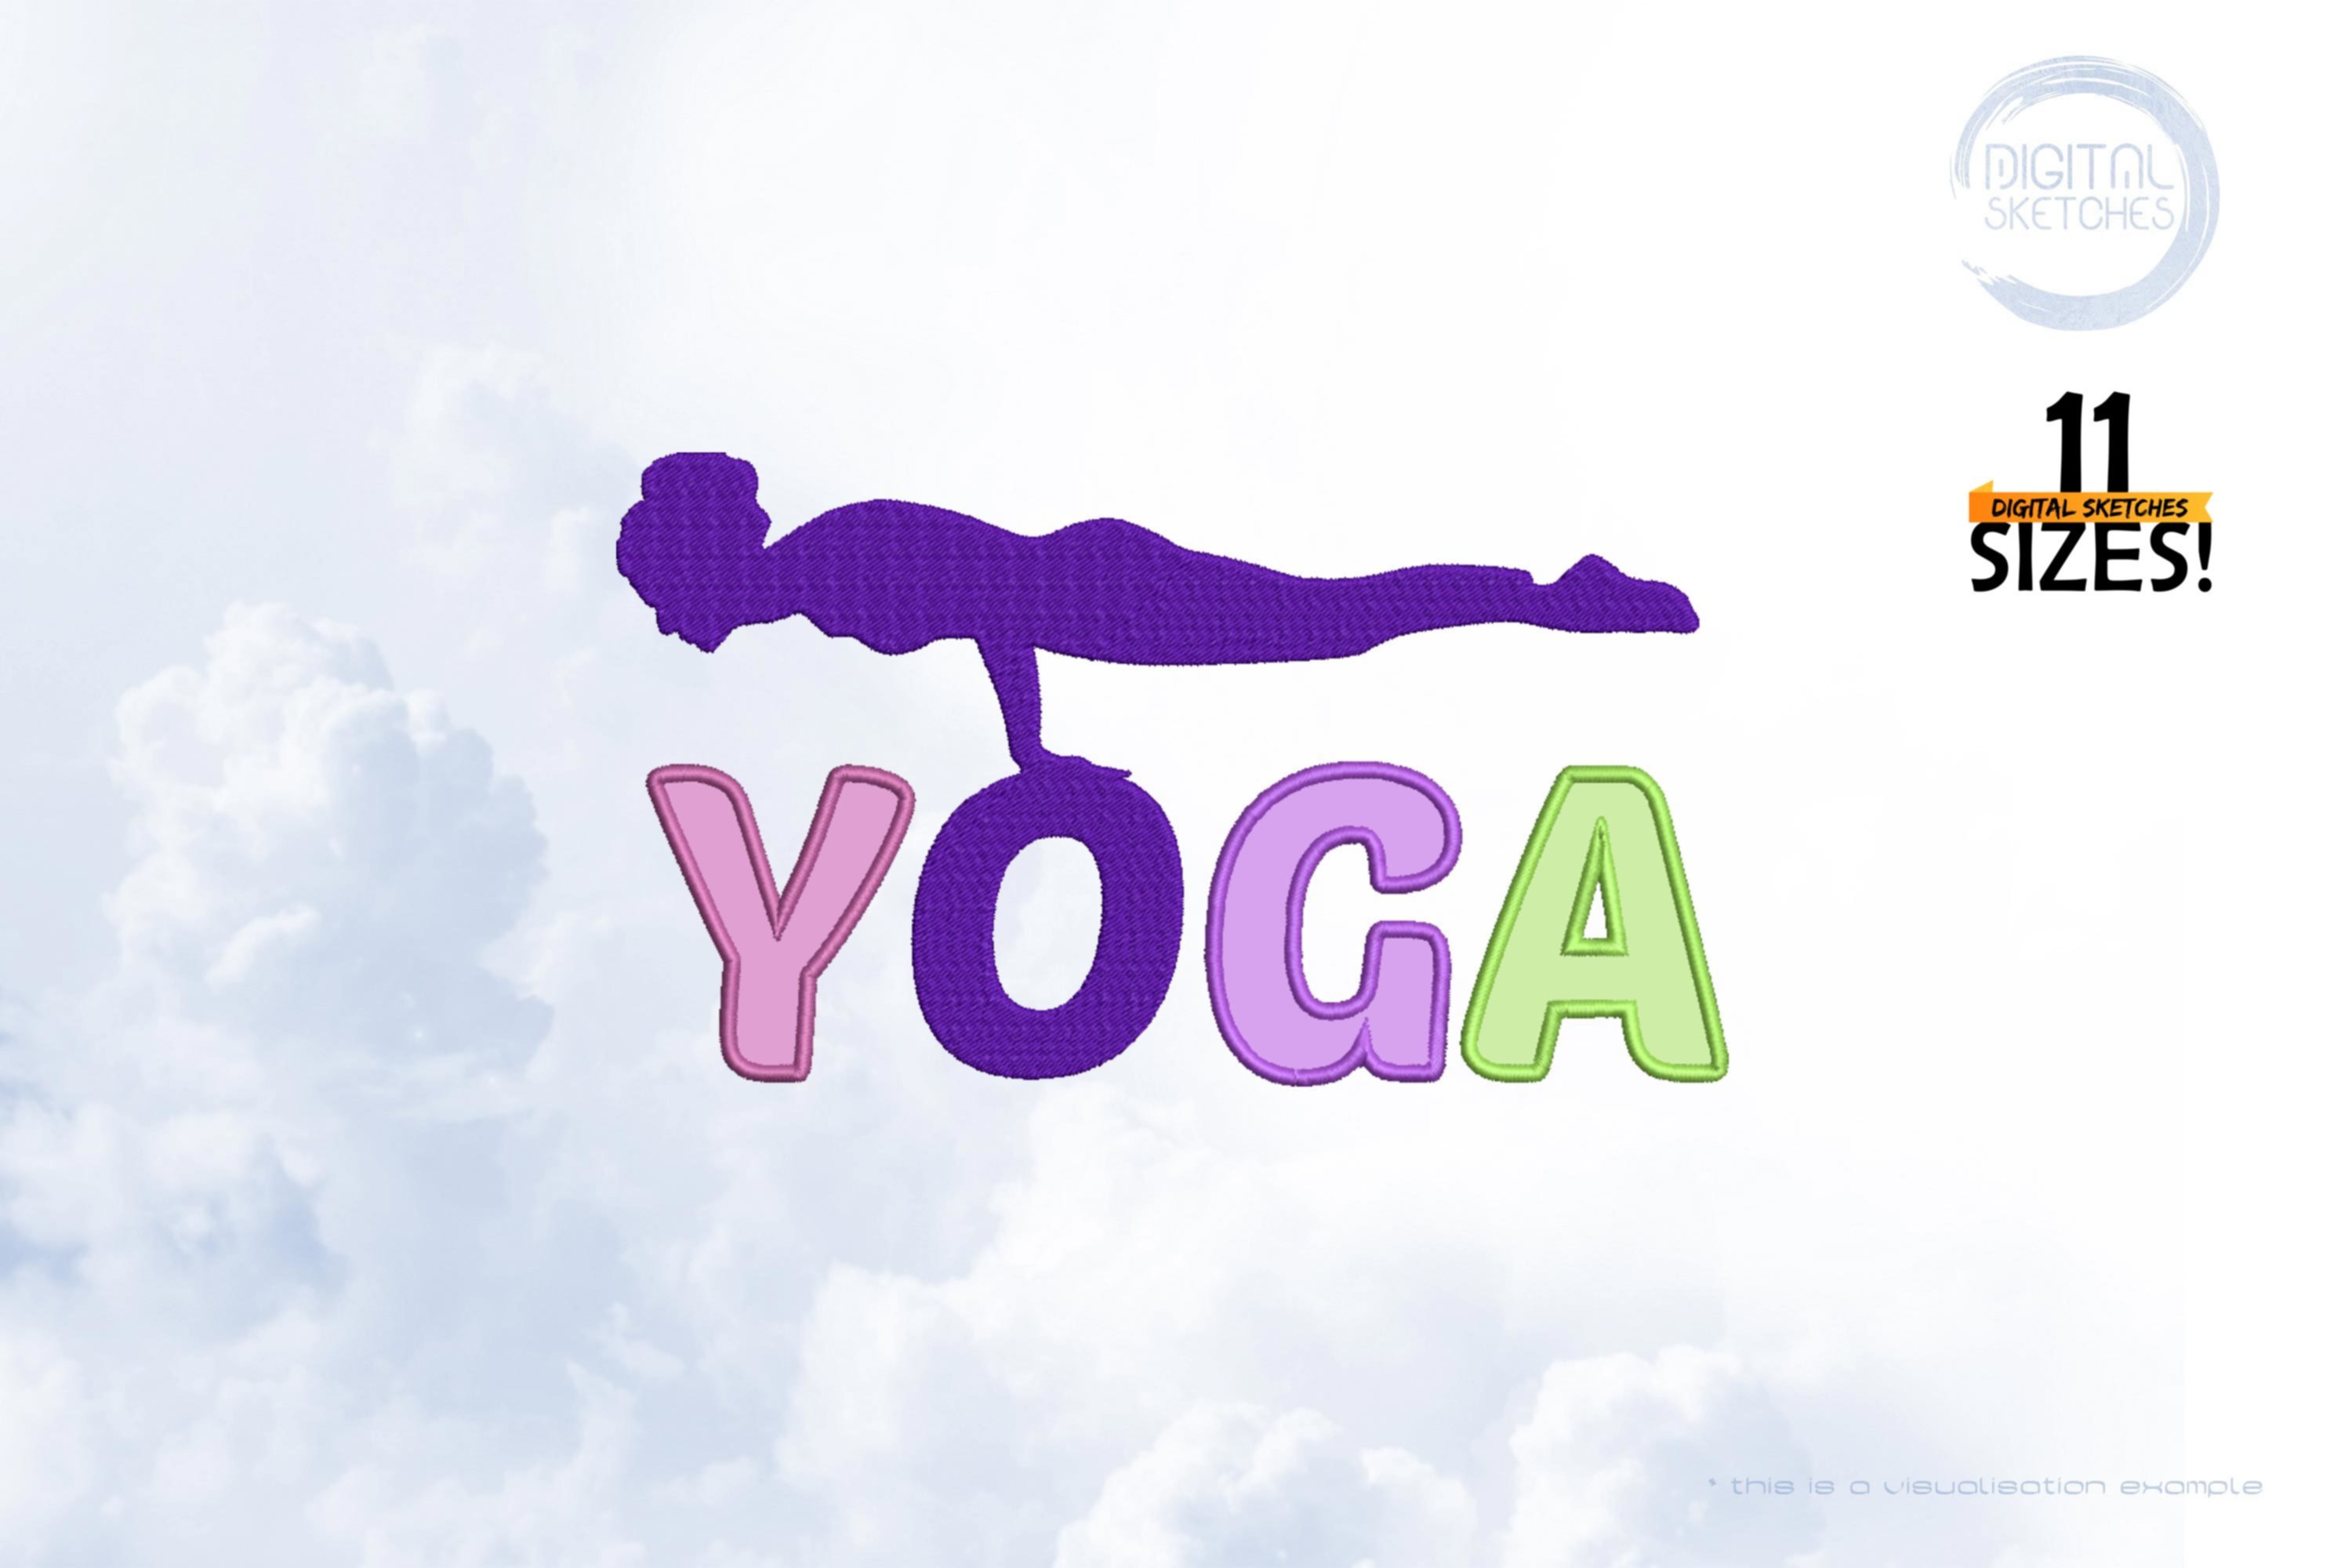 Yoga Asana